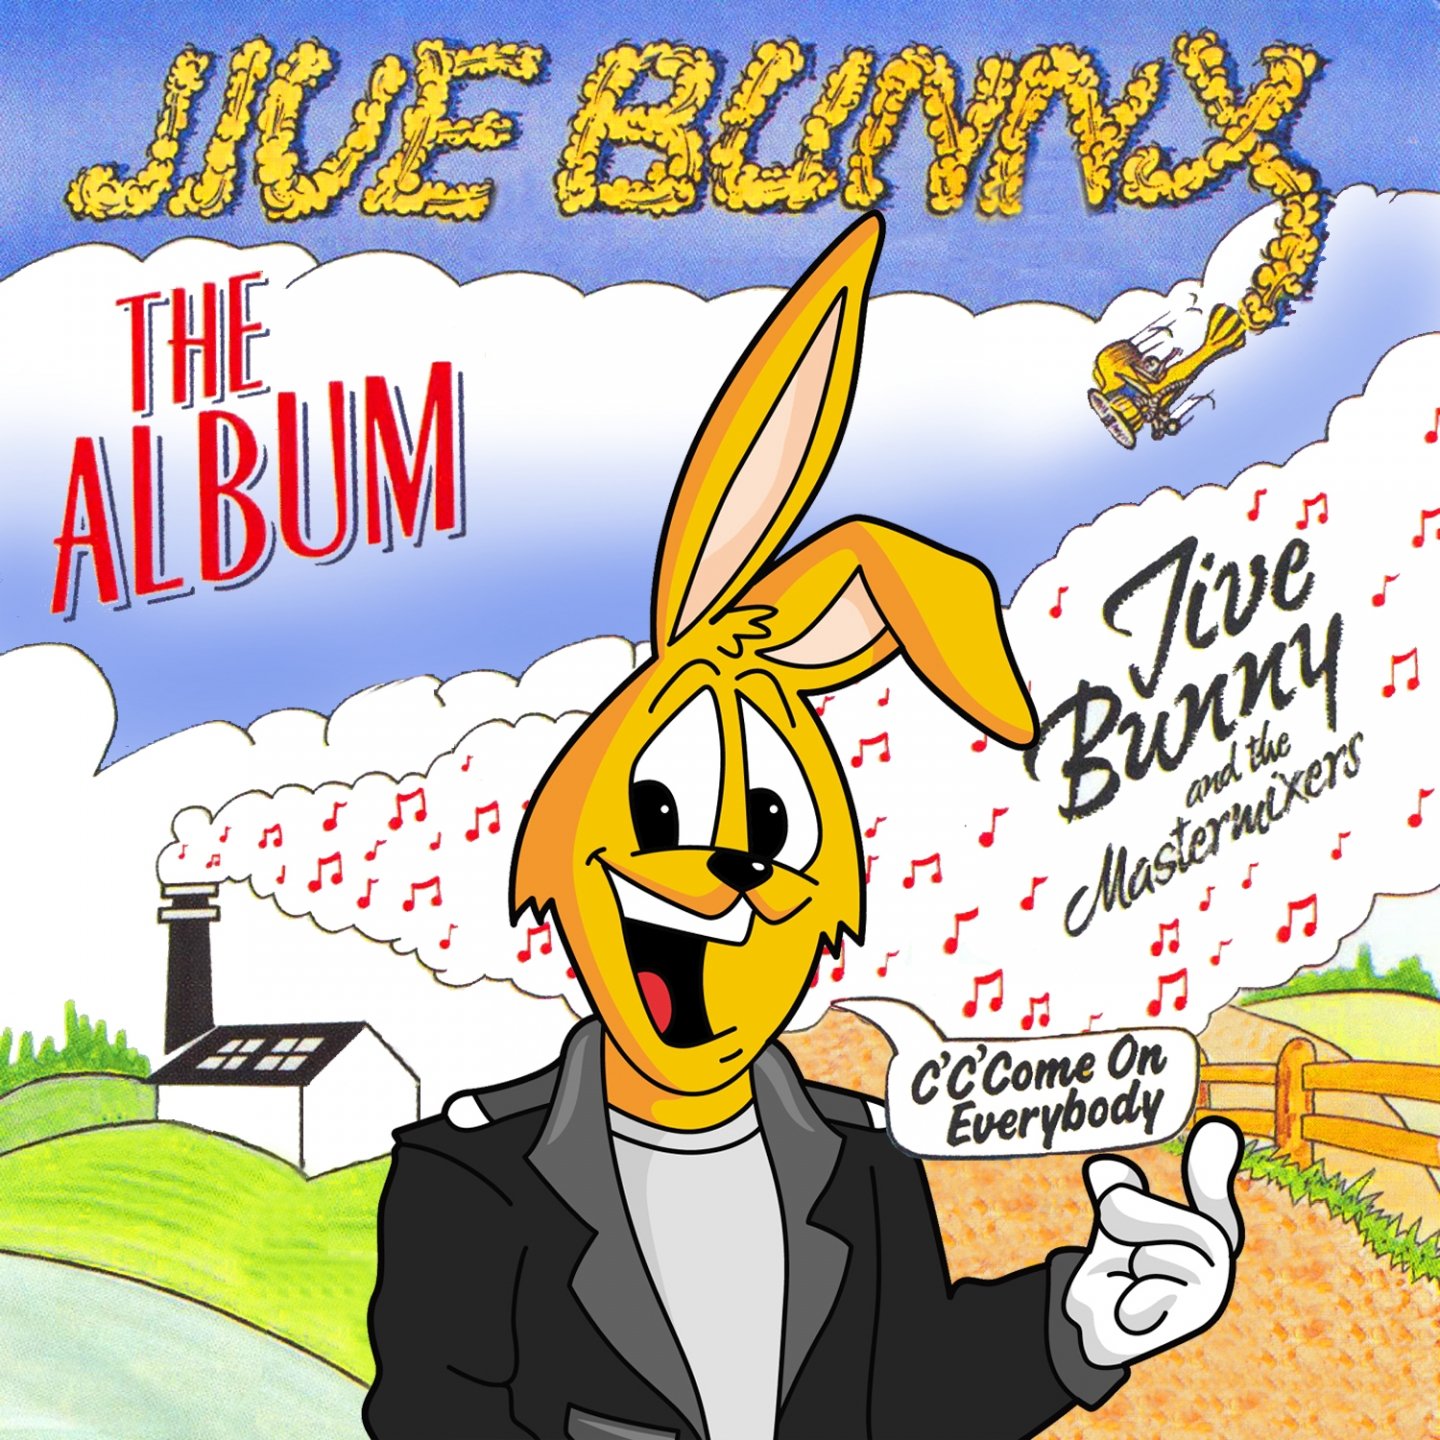 jive bunny tour